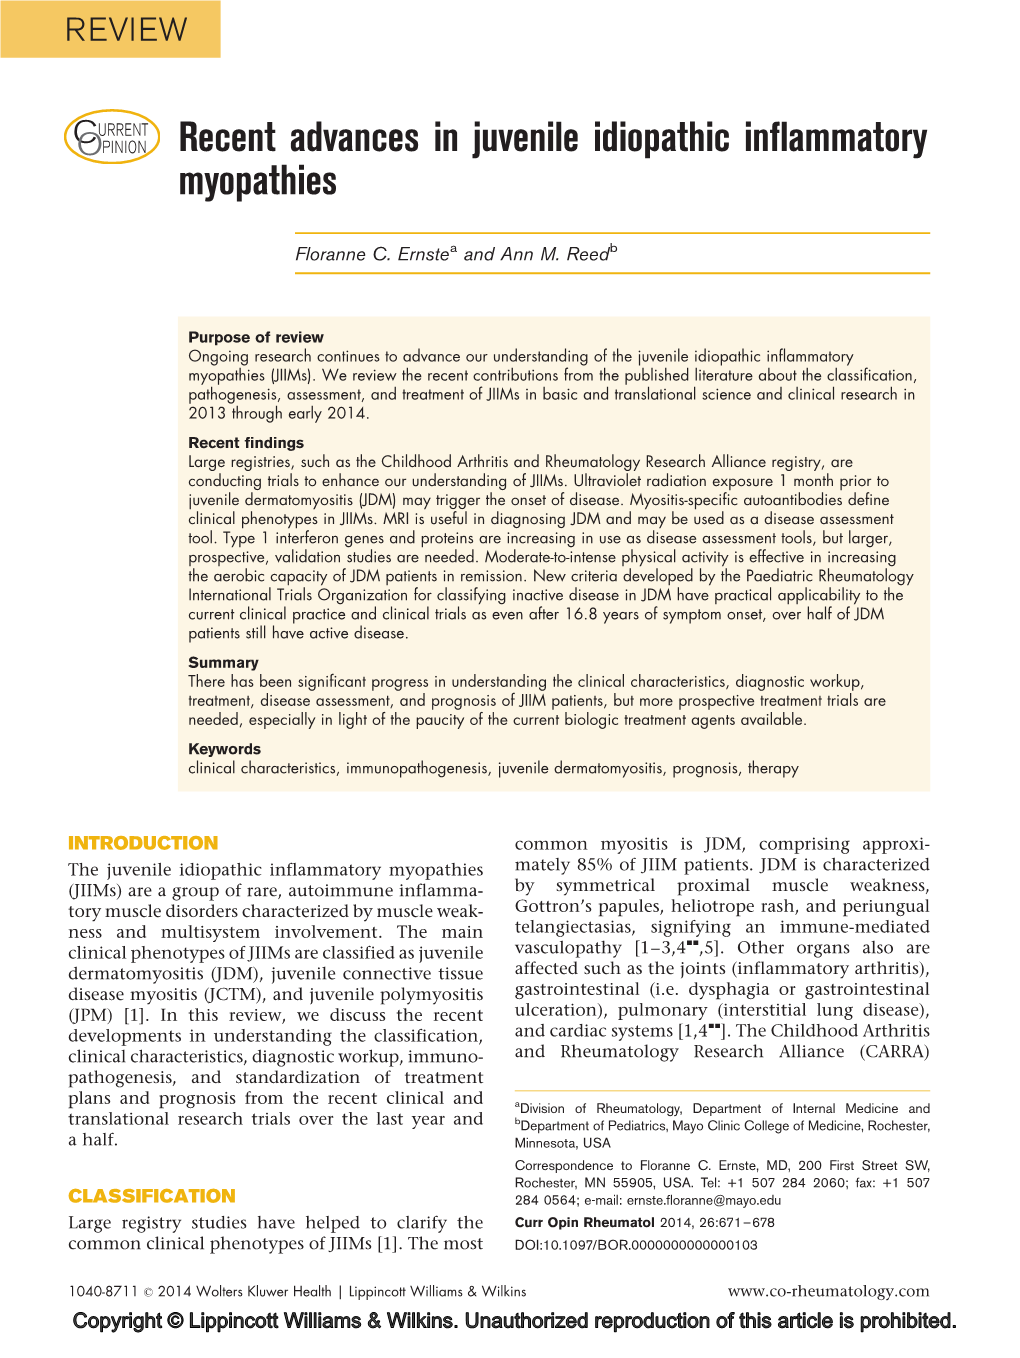 Recent Advances in Juvenile Idiopathic Inflammatory Myopathies